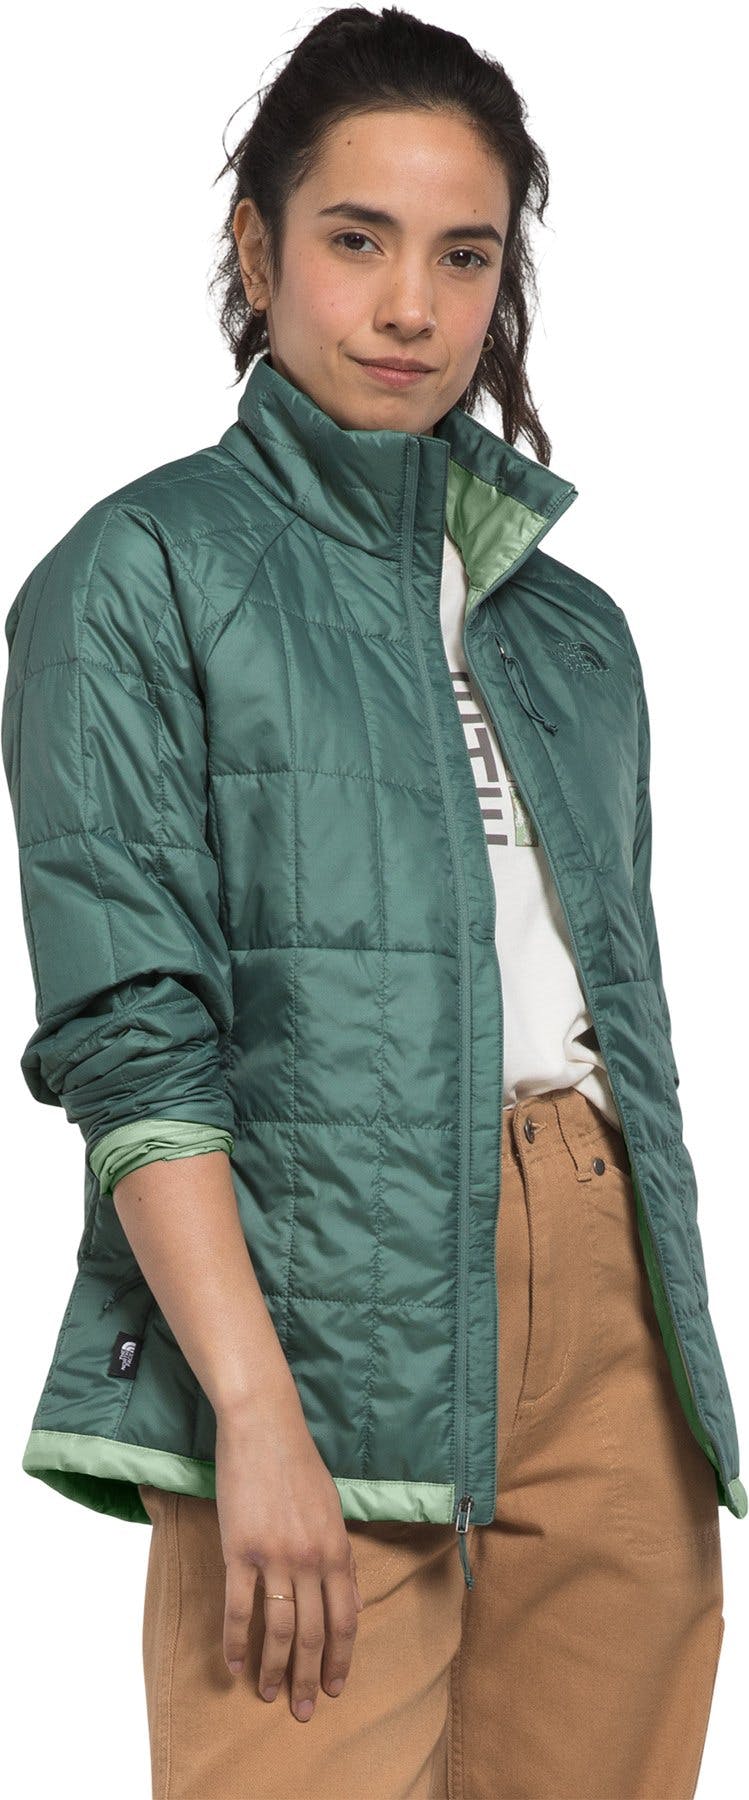 Product image for Circaloft Jacket - Women's